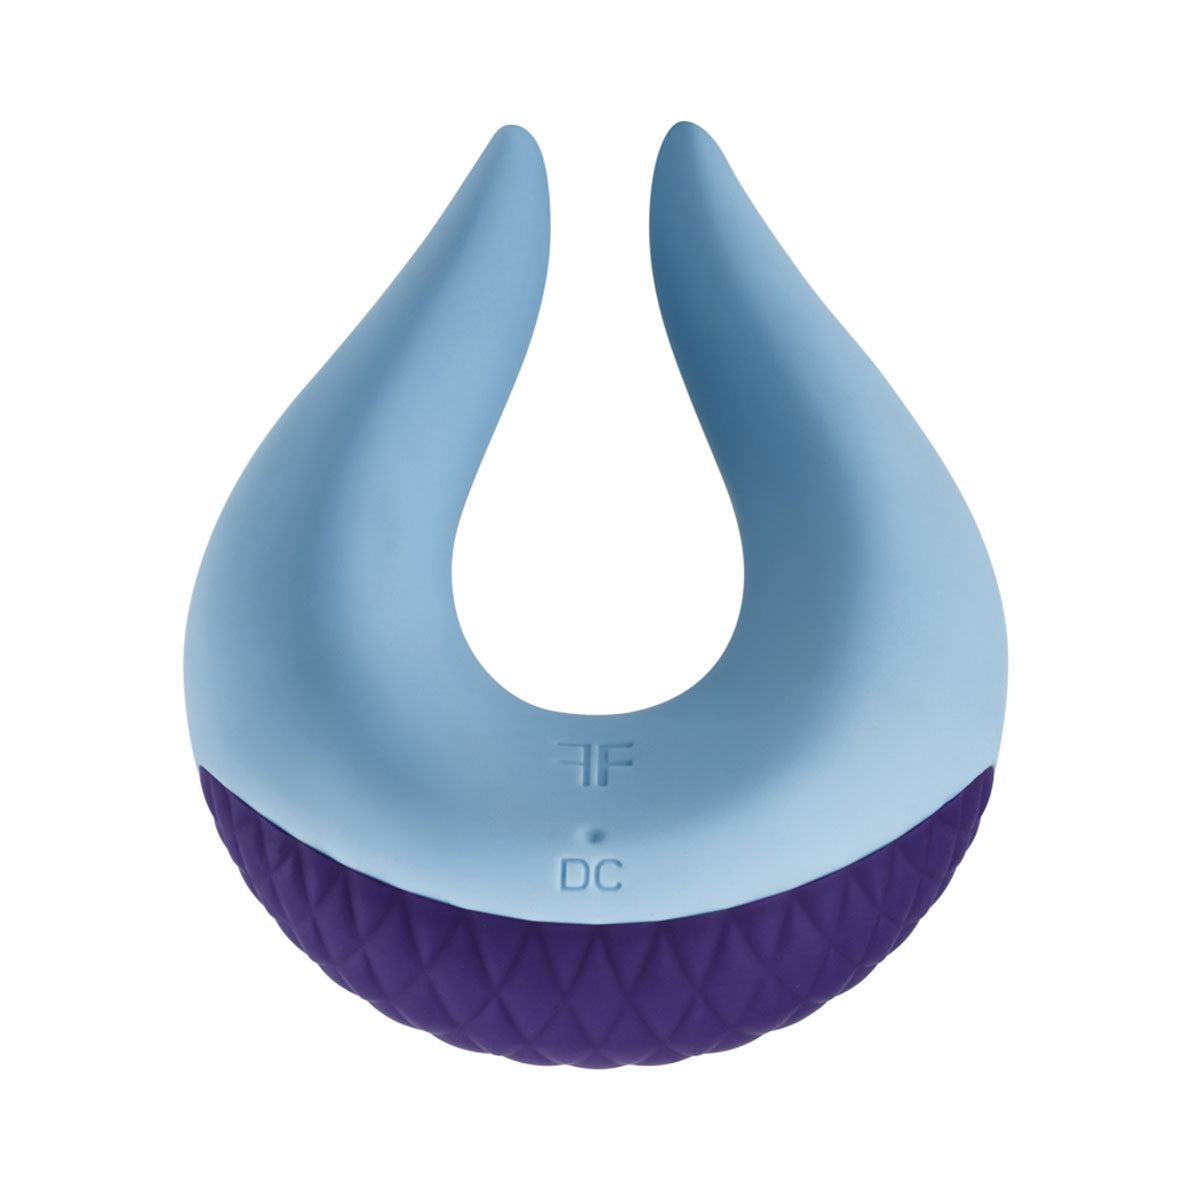 FemmeFunn Volea Rechargeable Silicone Fluttering Tip Vibrator Light Blue - Zateo Joy